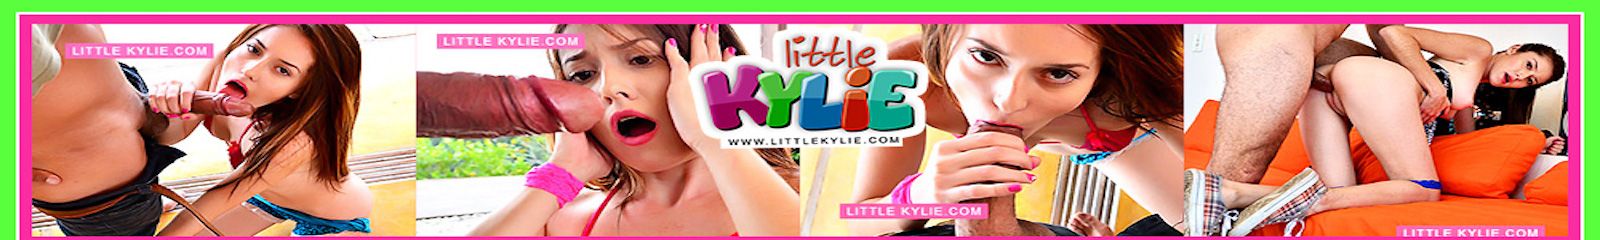 Little Kylie